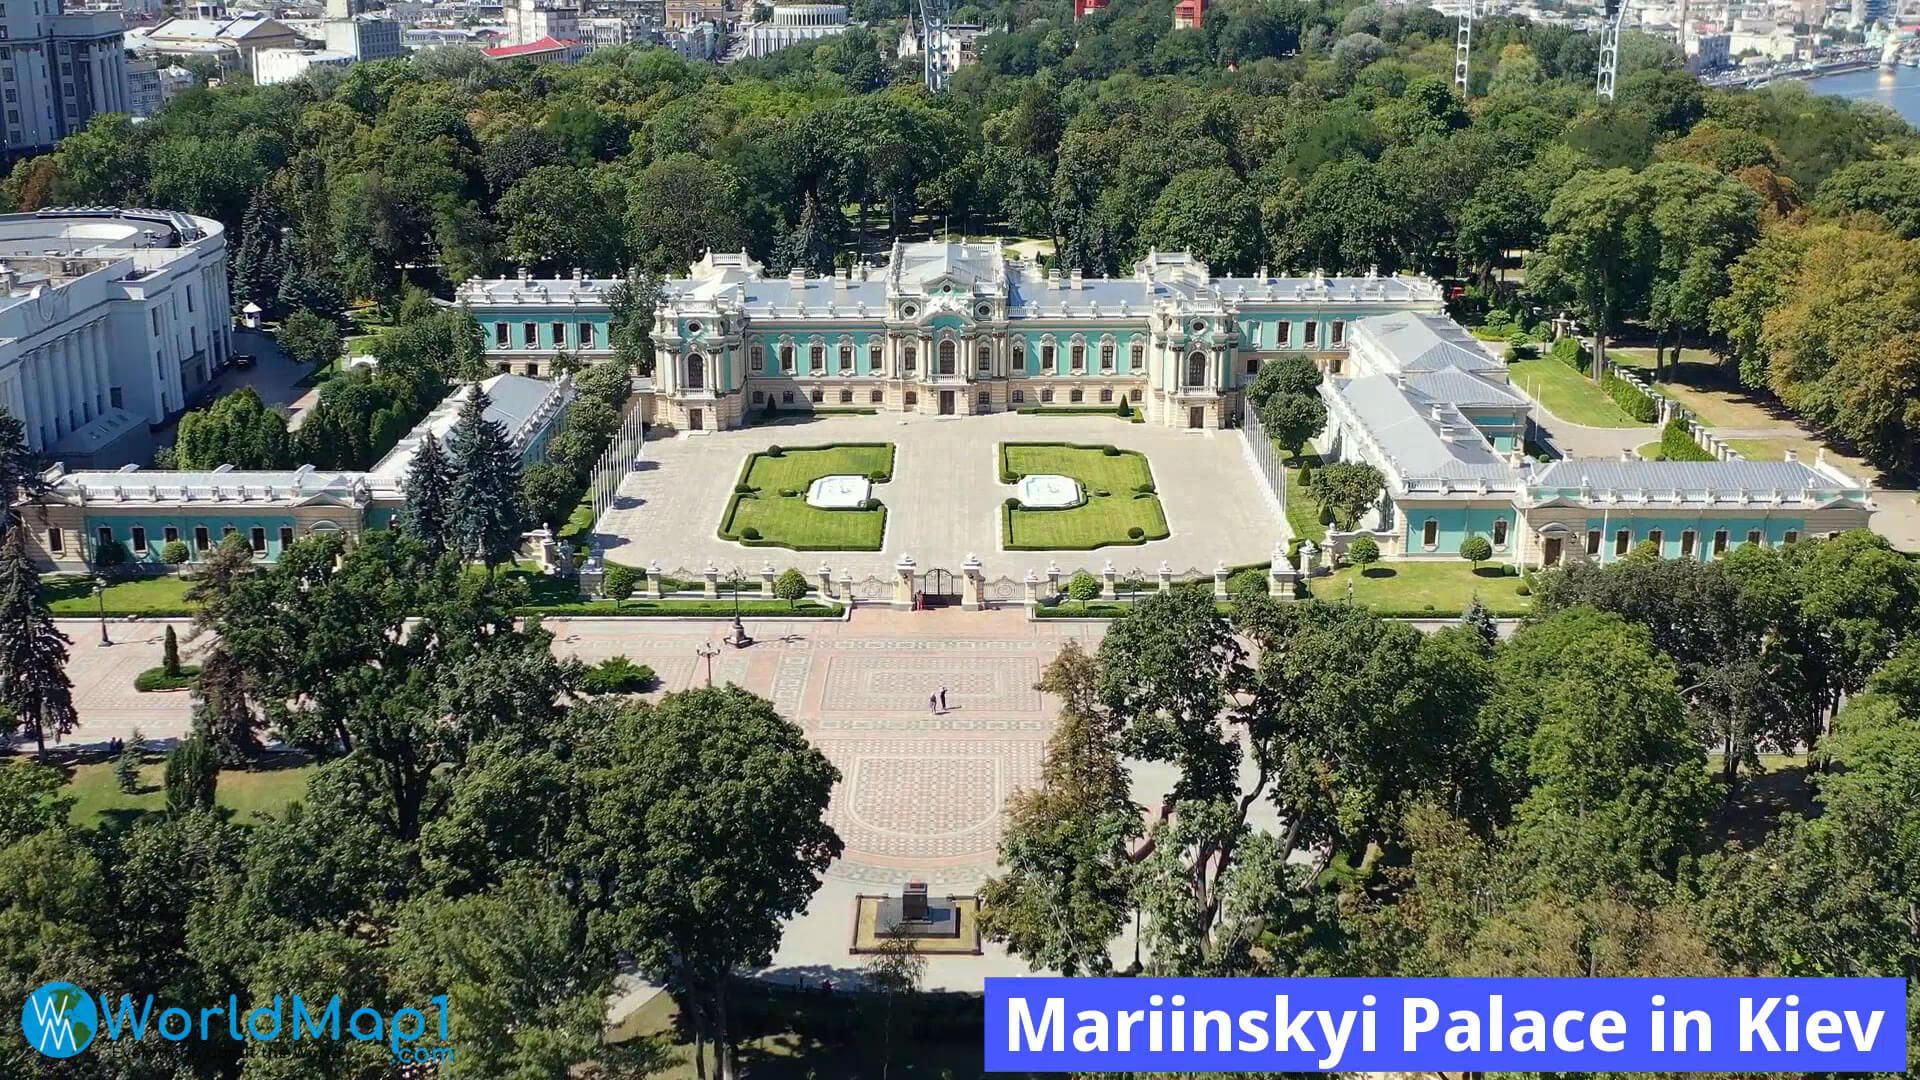 Mariinskyi Palace in Kiev